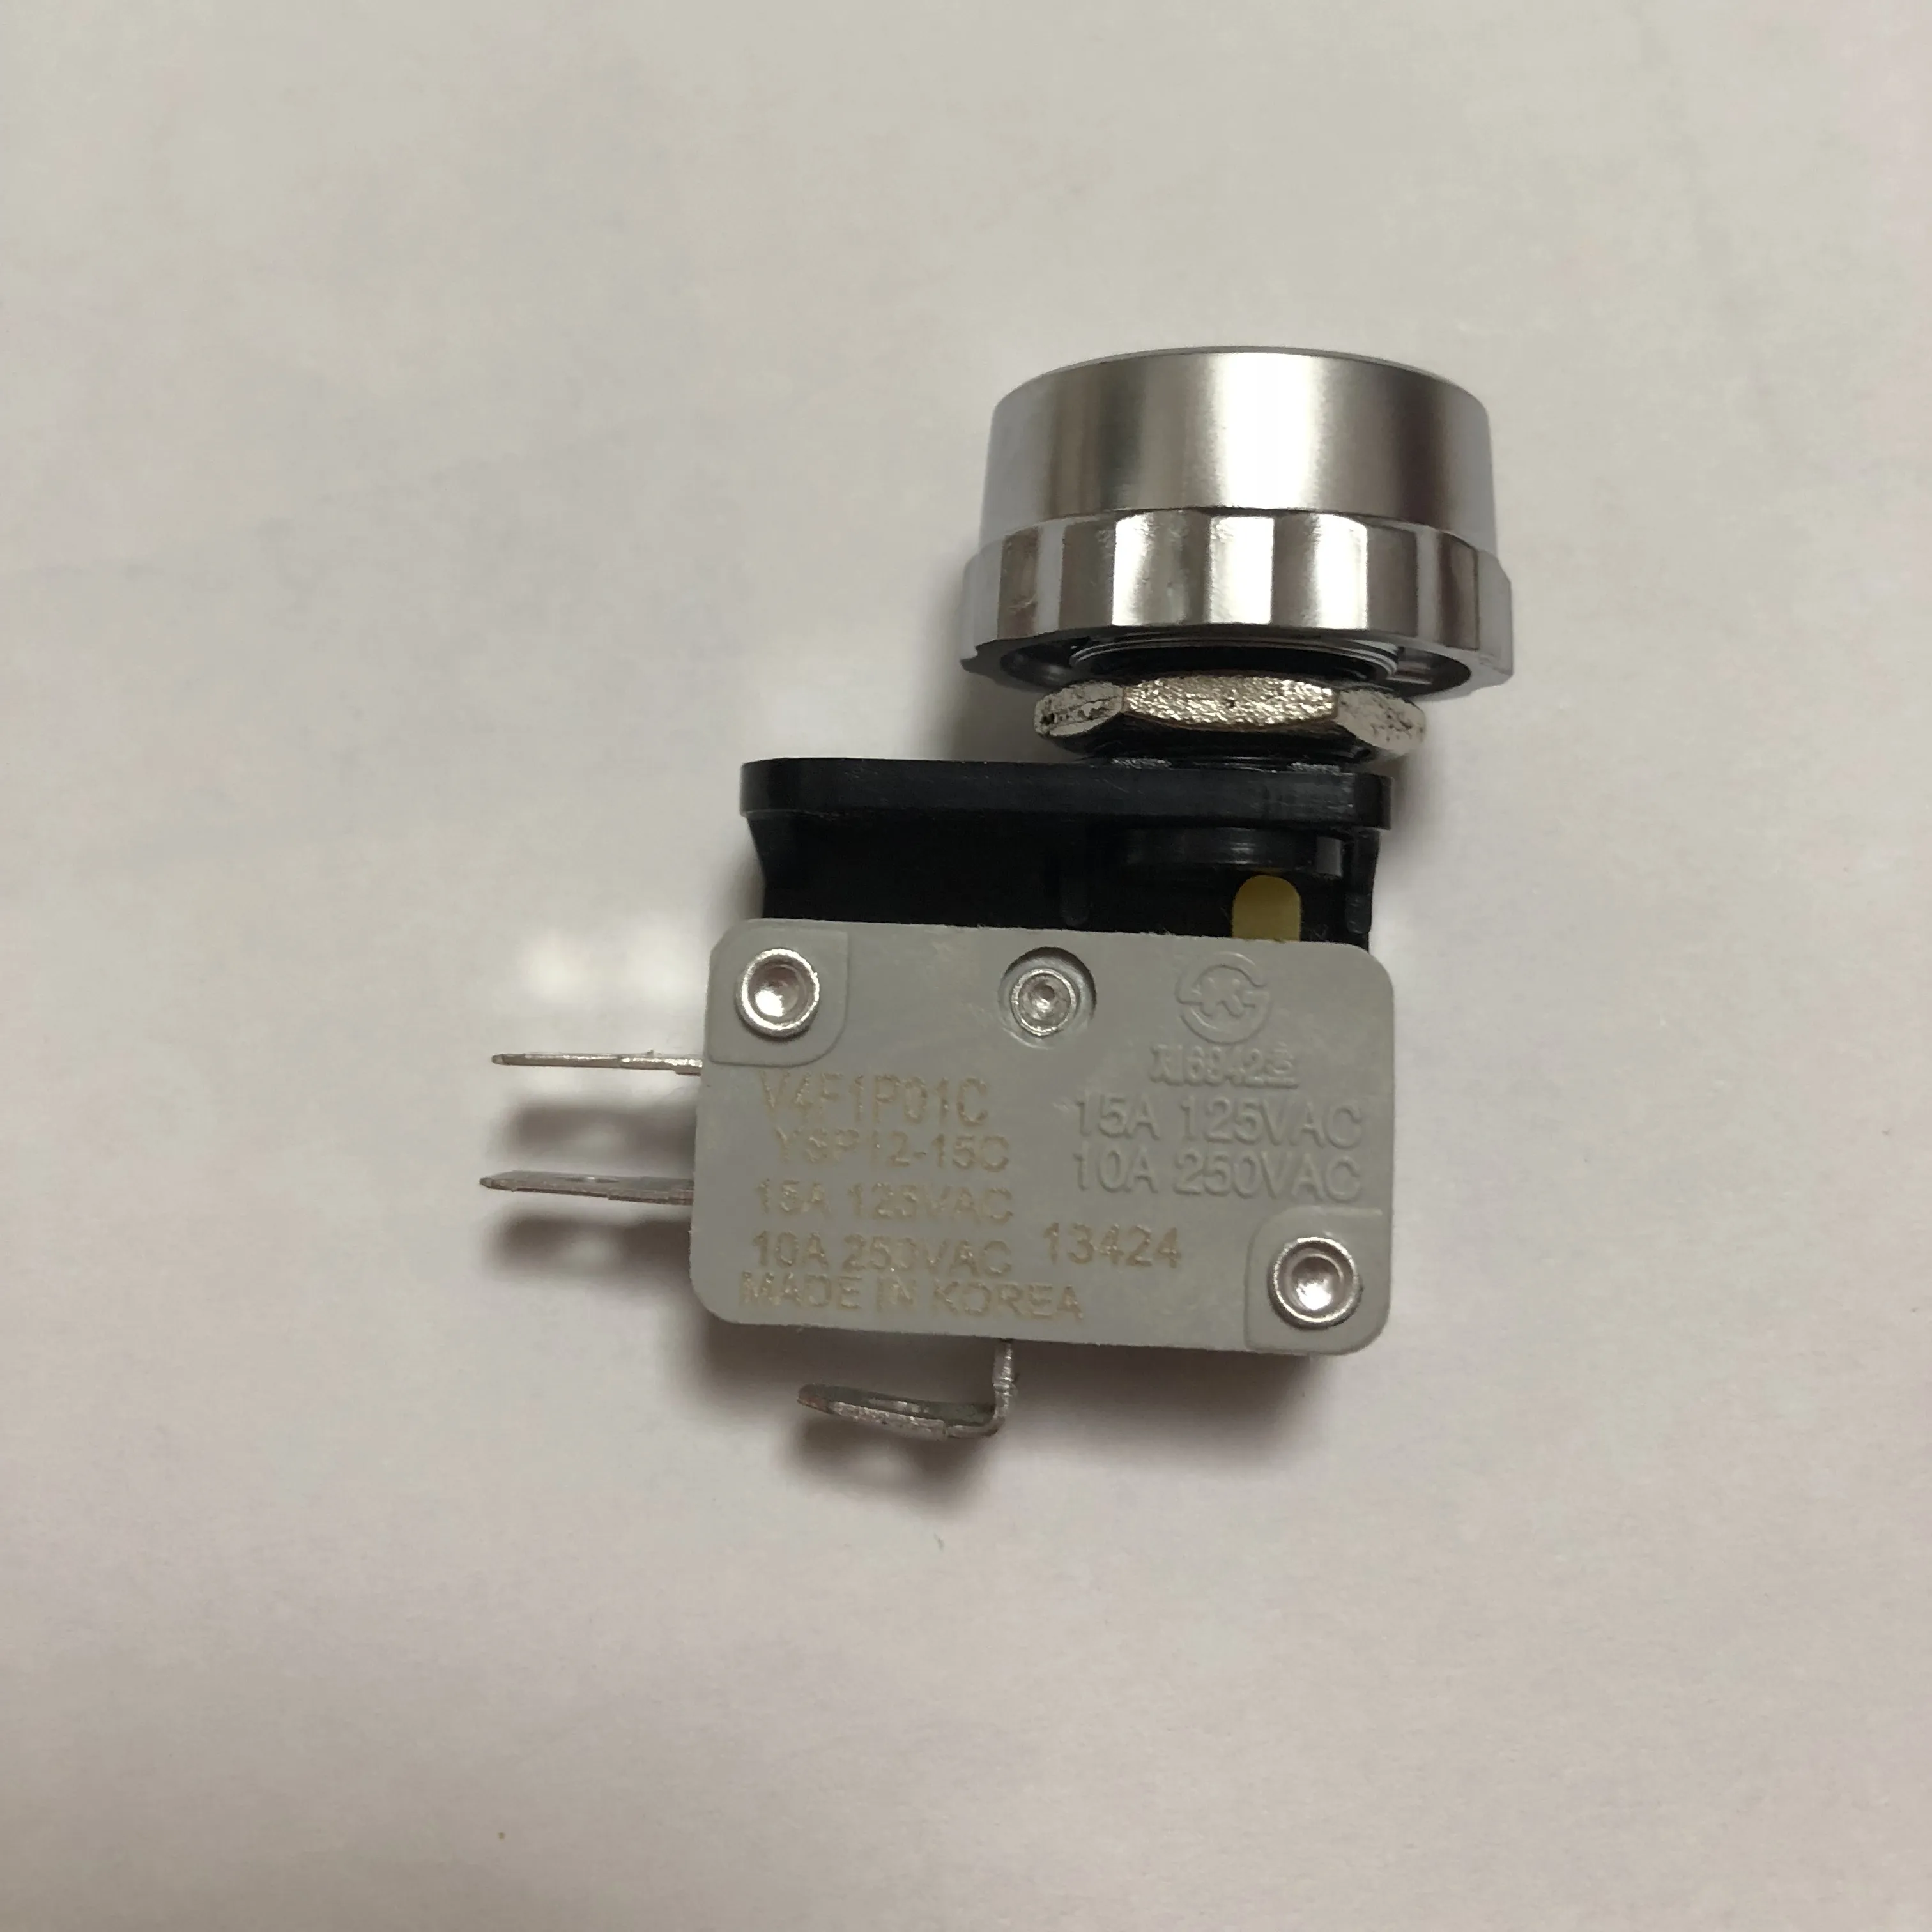 Micro interruptor YSP12-15C V4F1P01C, nuevo, disponible